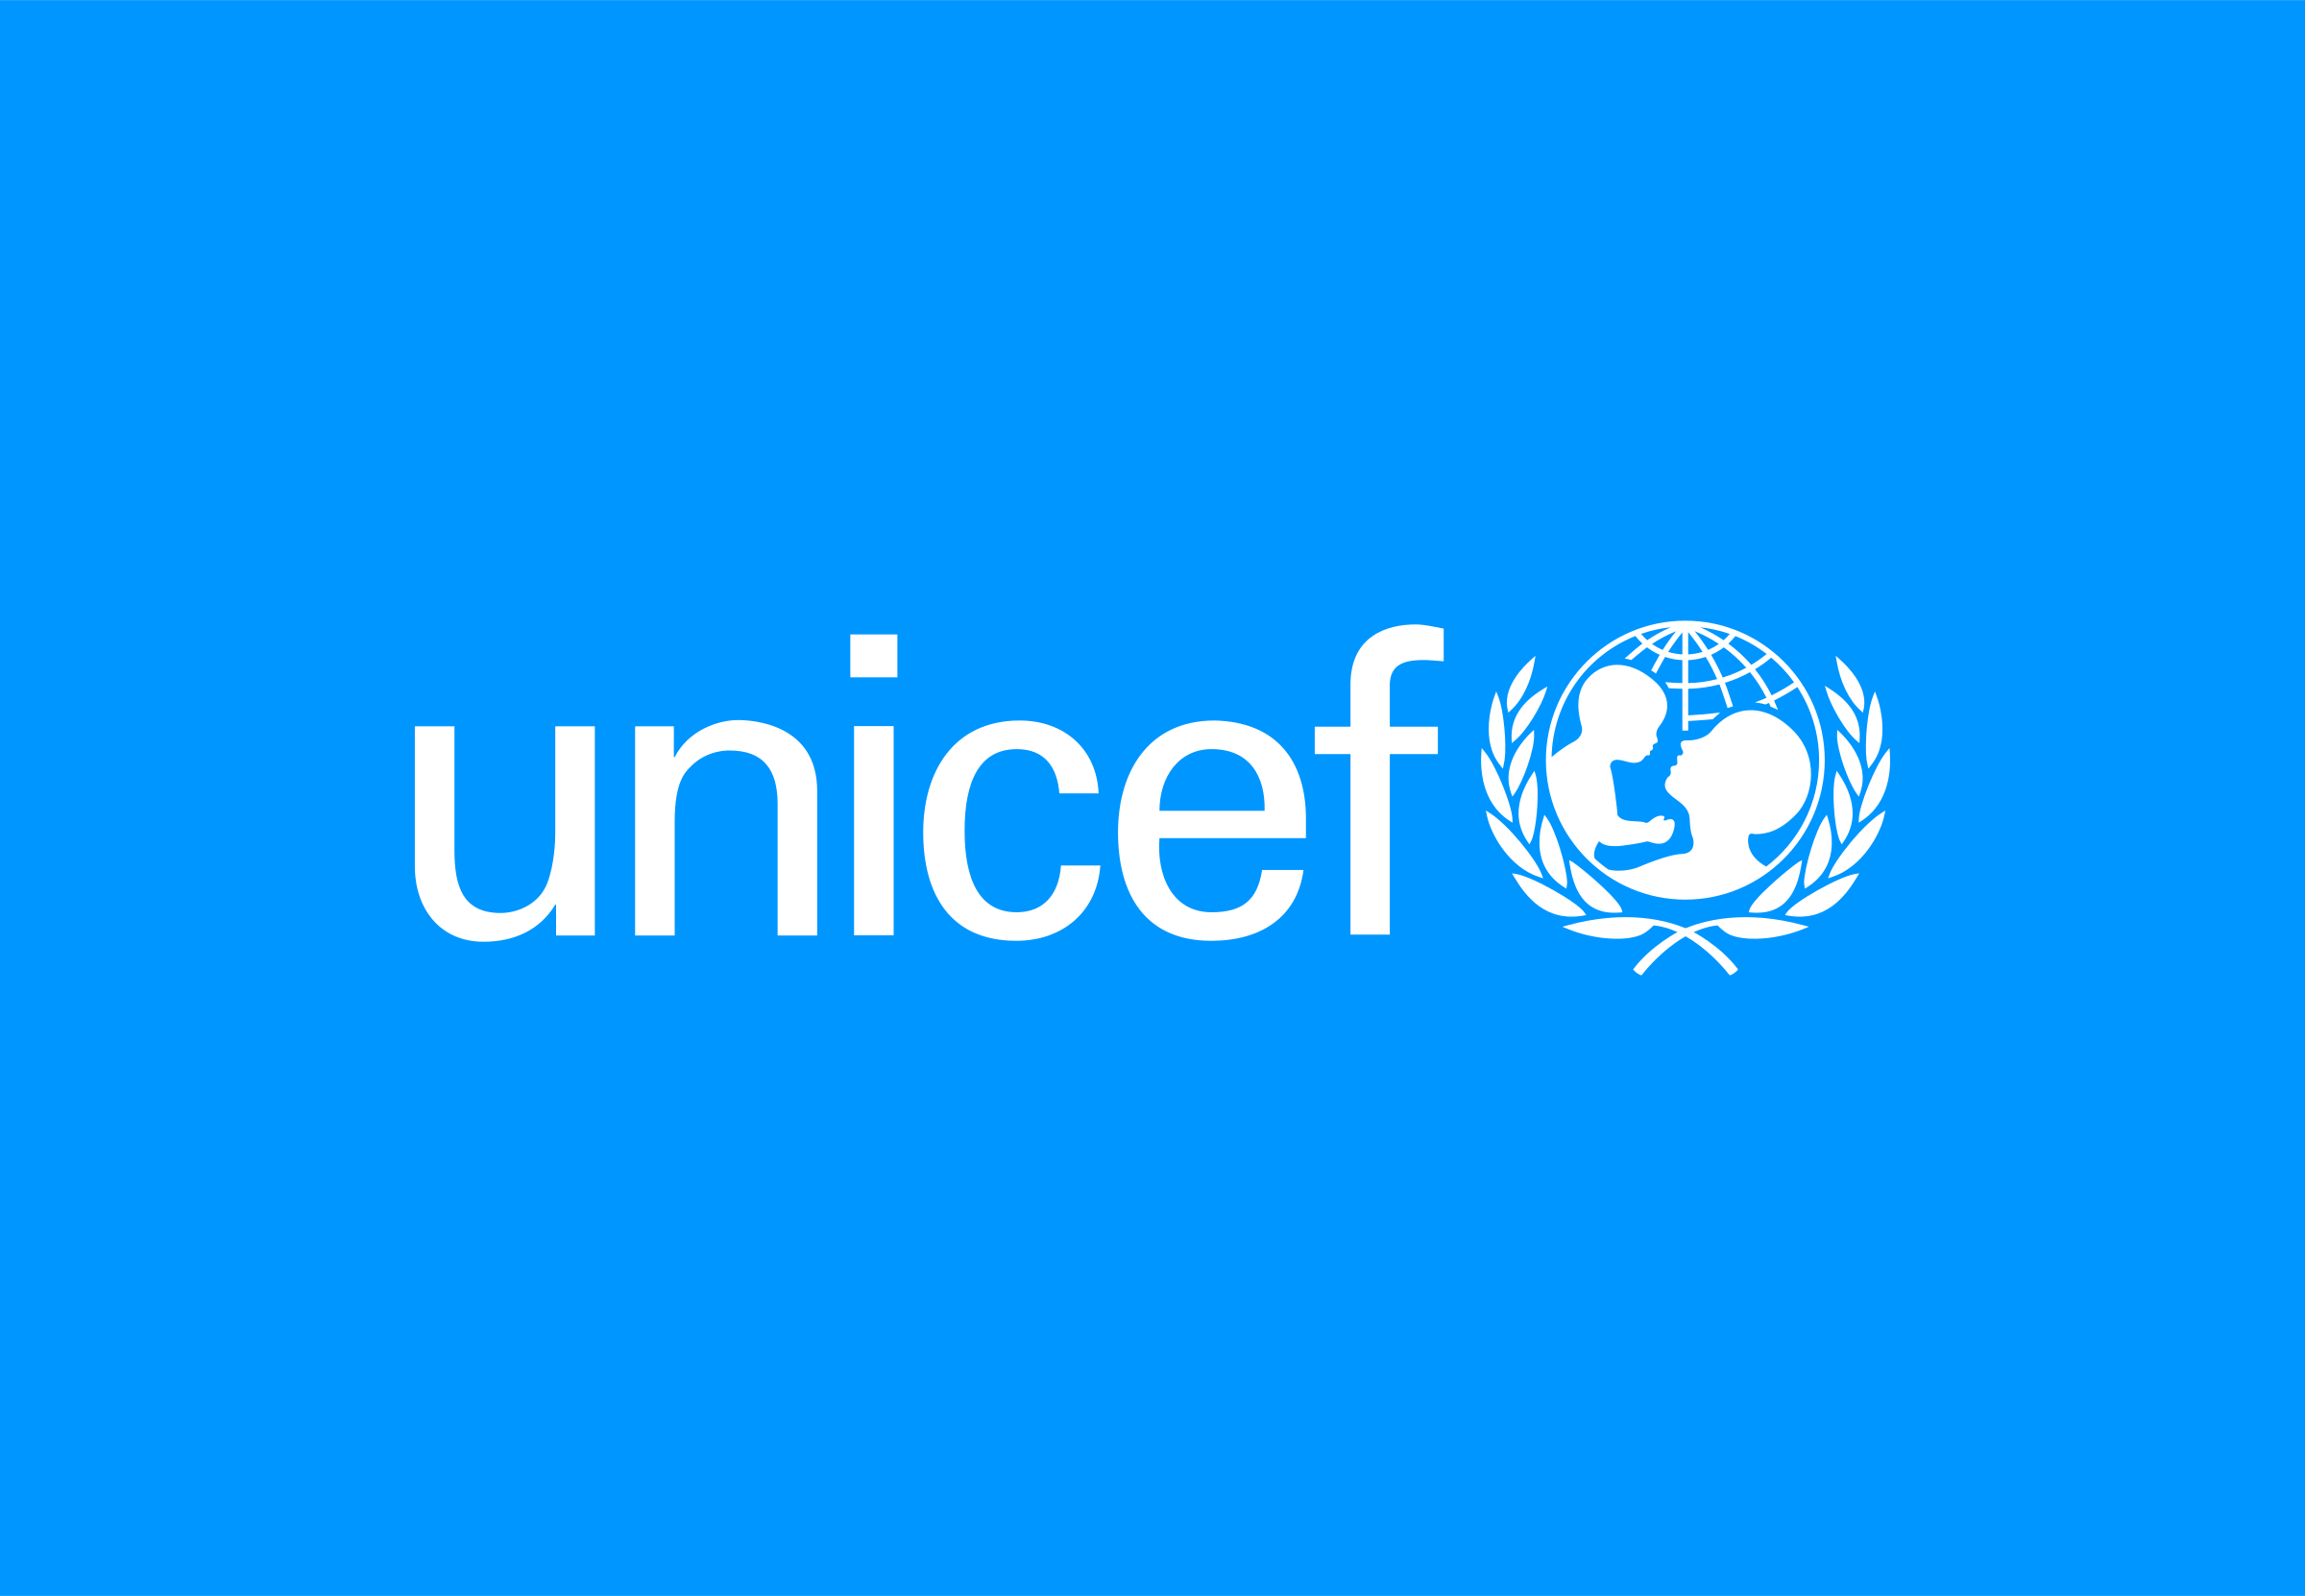 Education remain unattainable dream to many Nigerian children - UNICEF